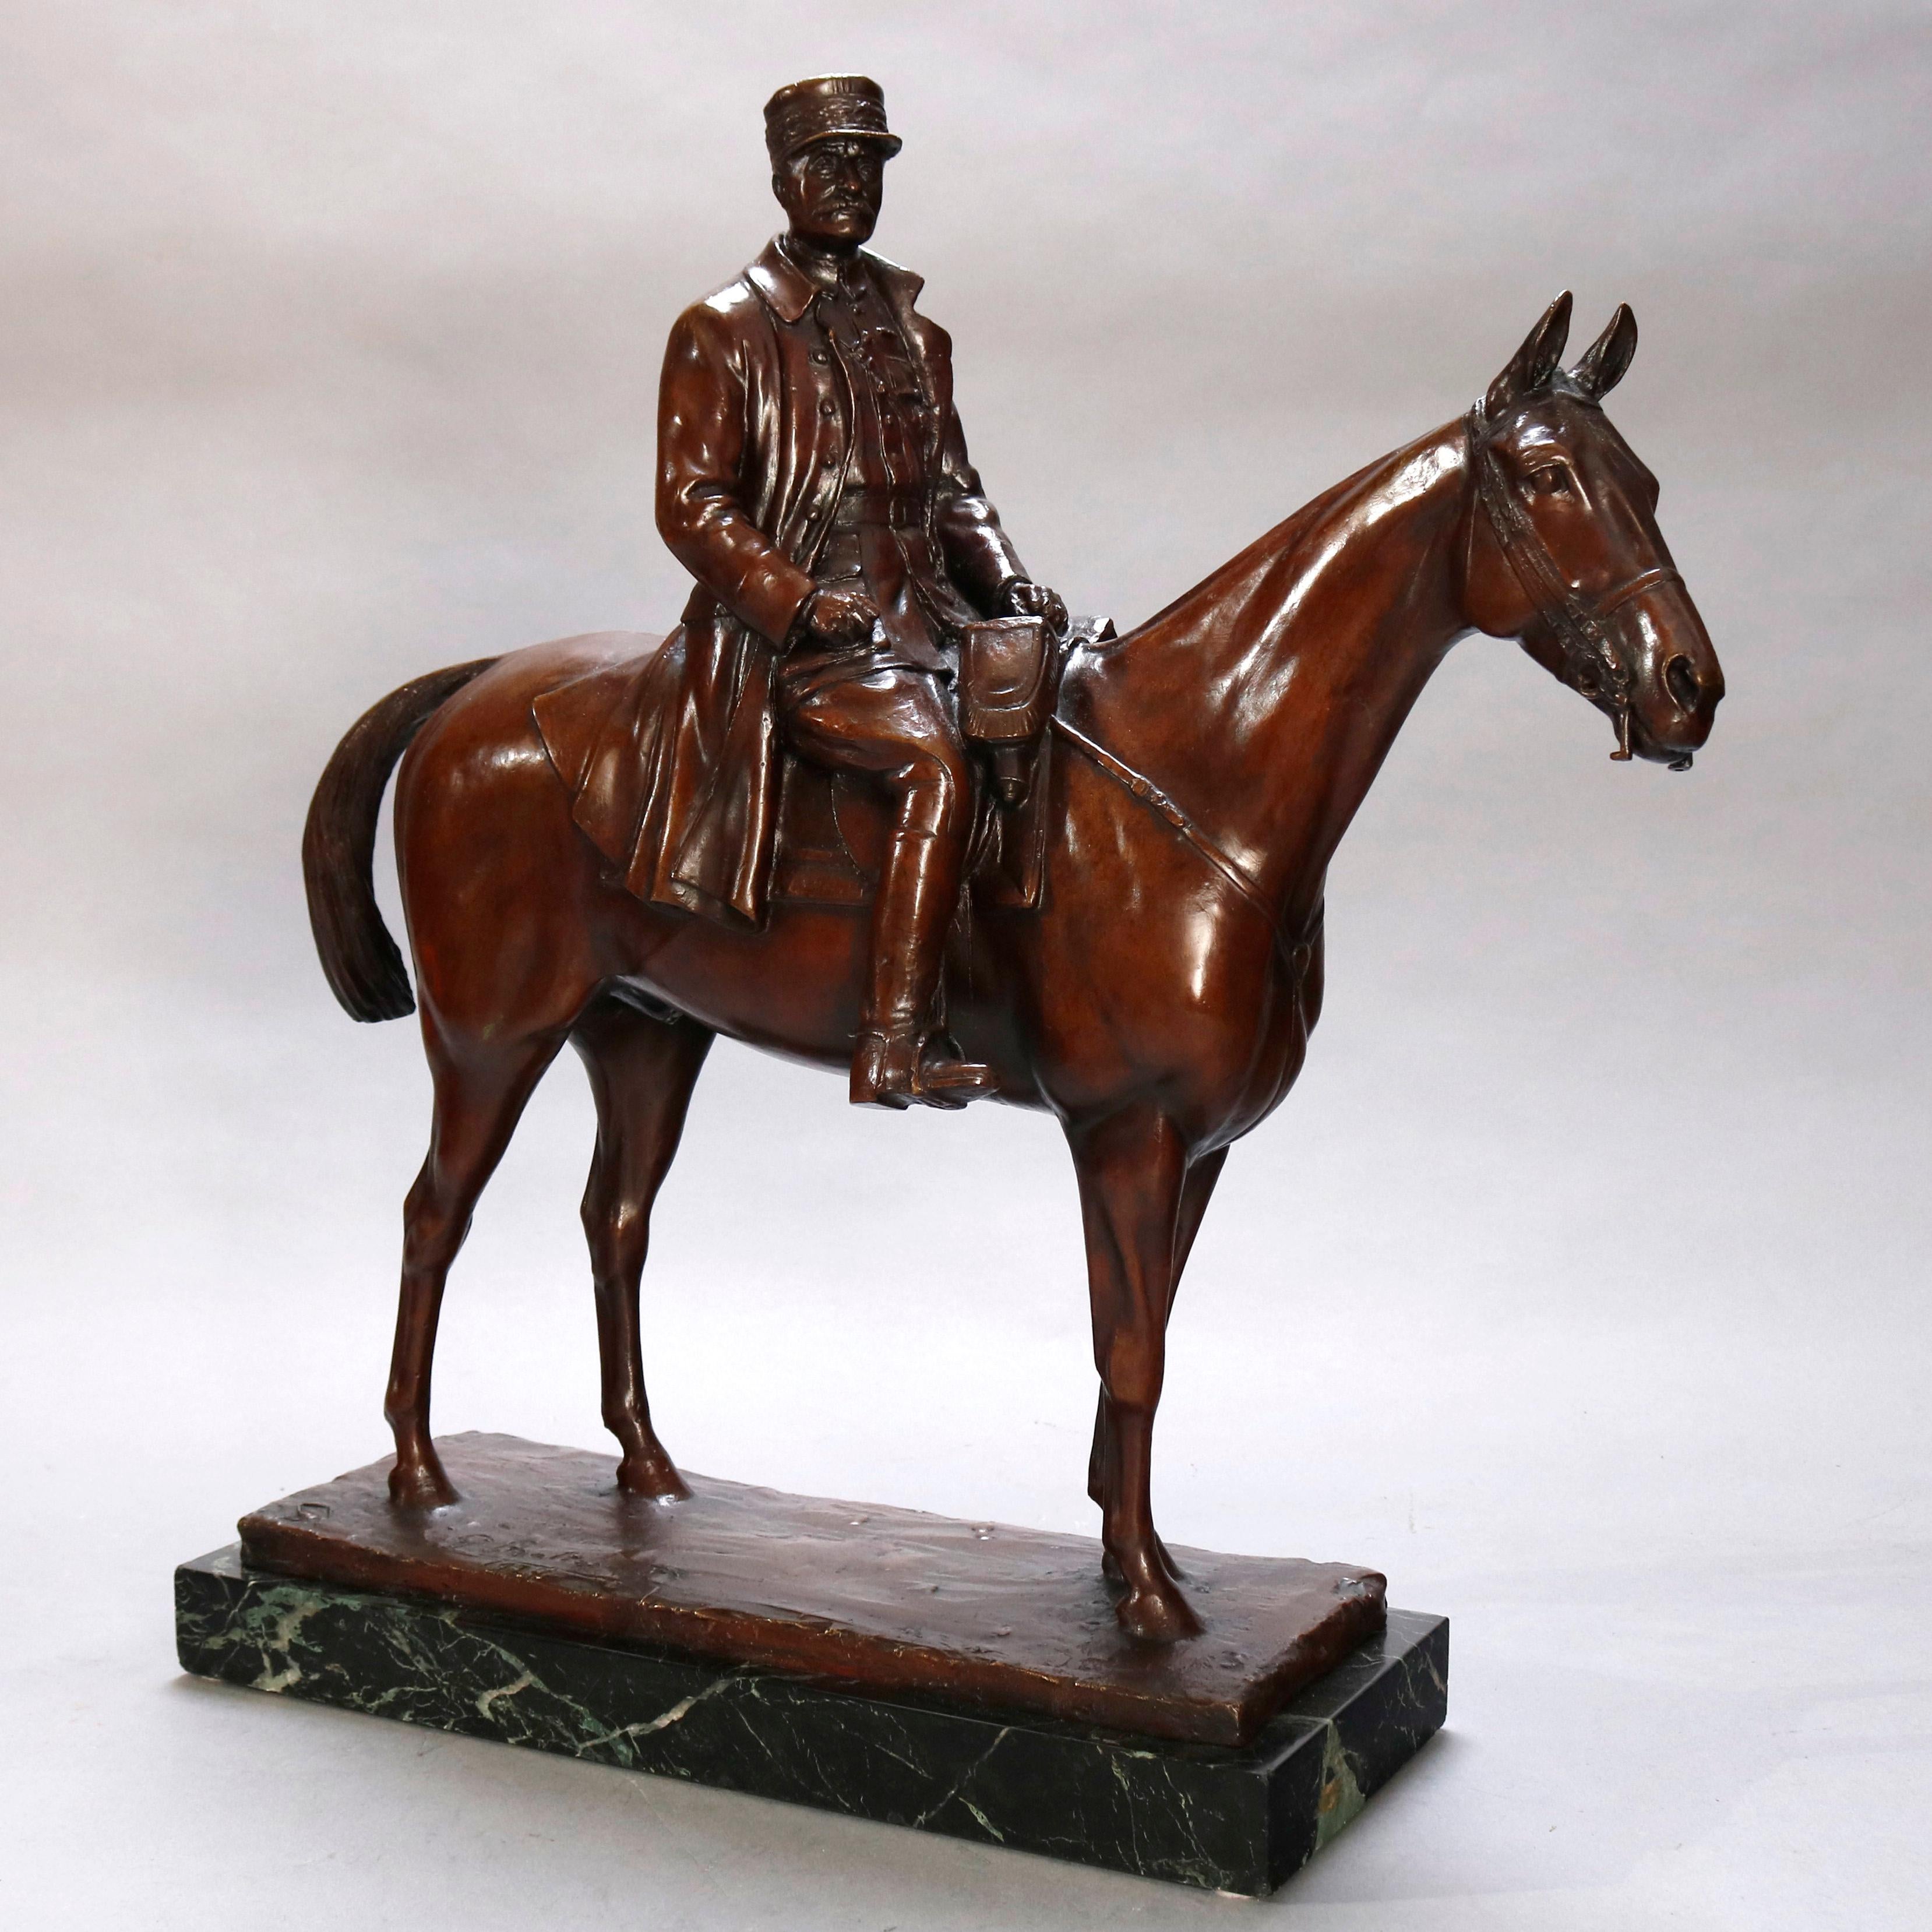 Cast Equestrian Portrait Bronze Military Sculpture Marshal Foch after Malissard